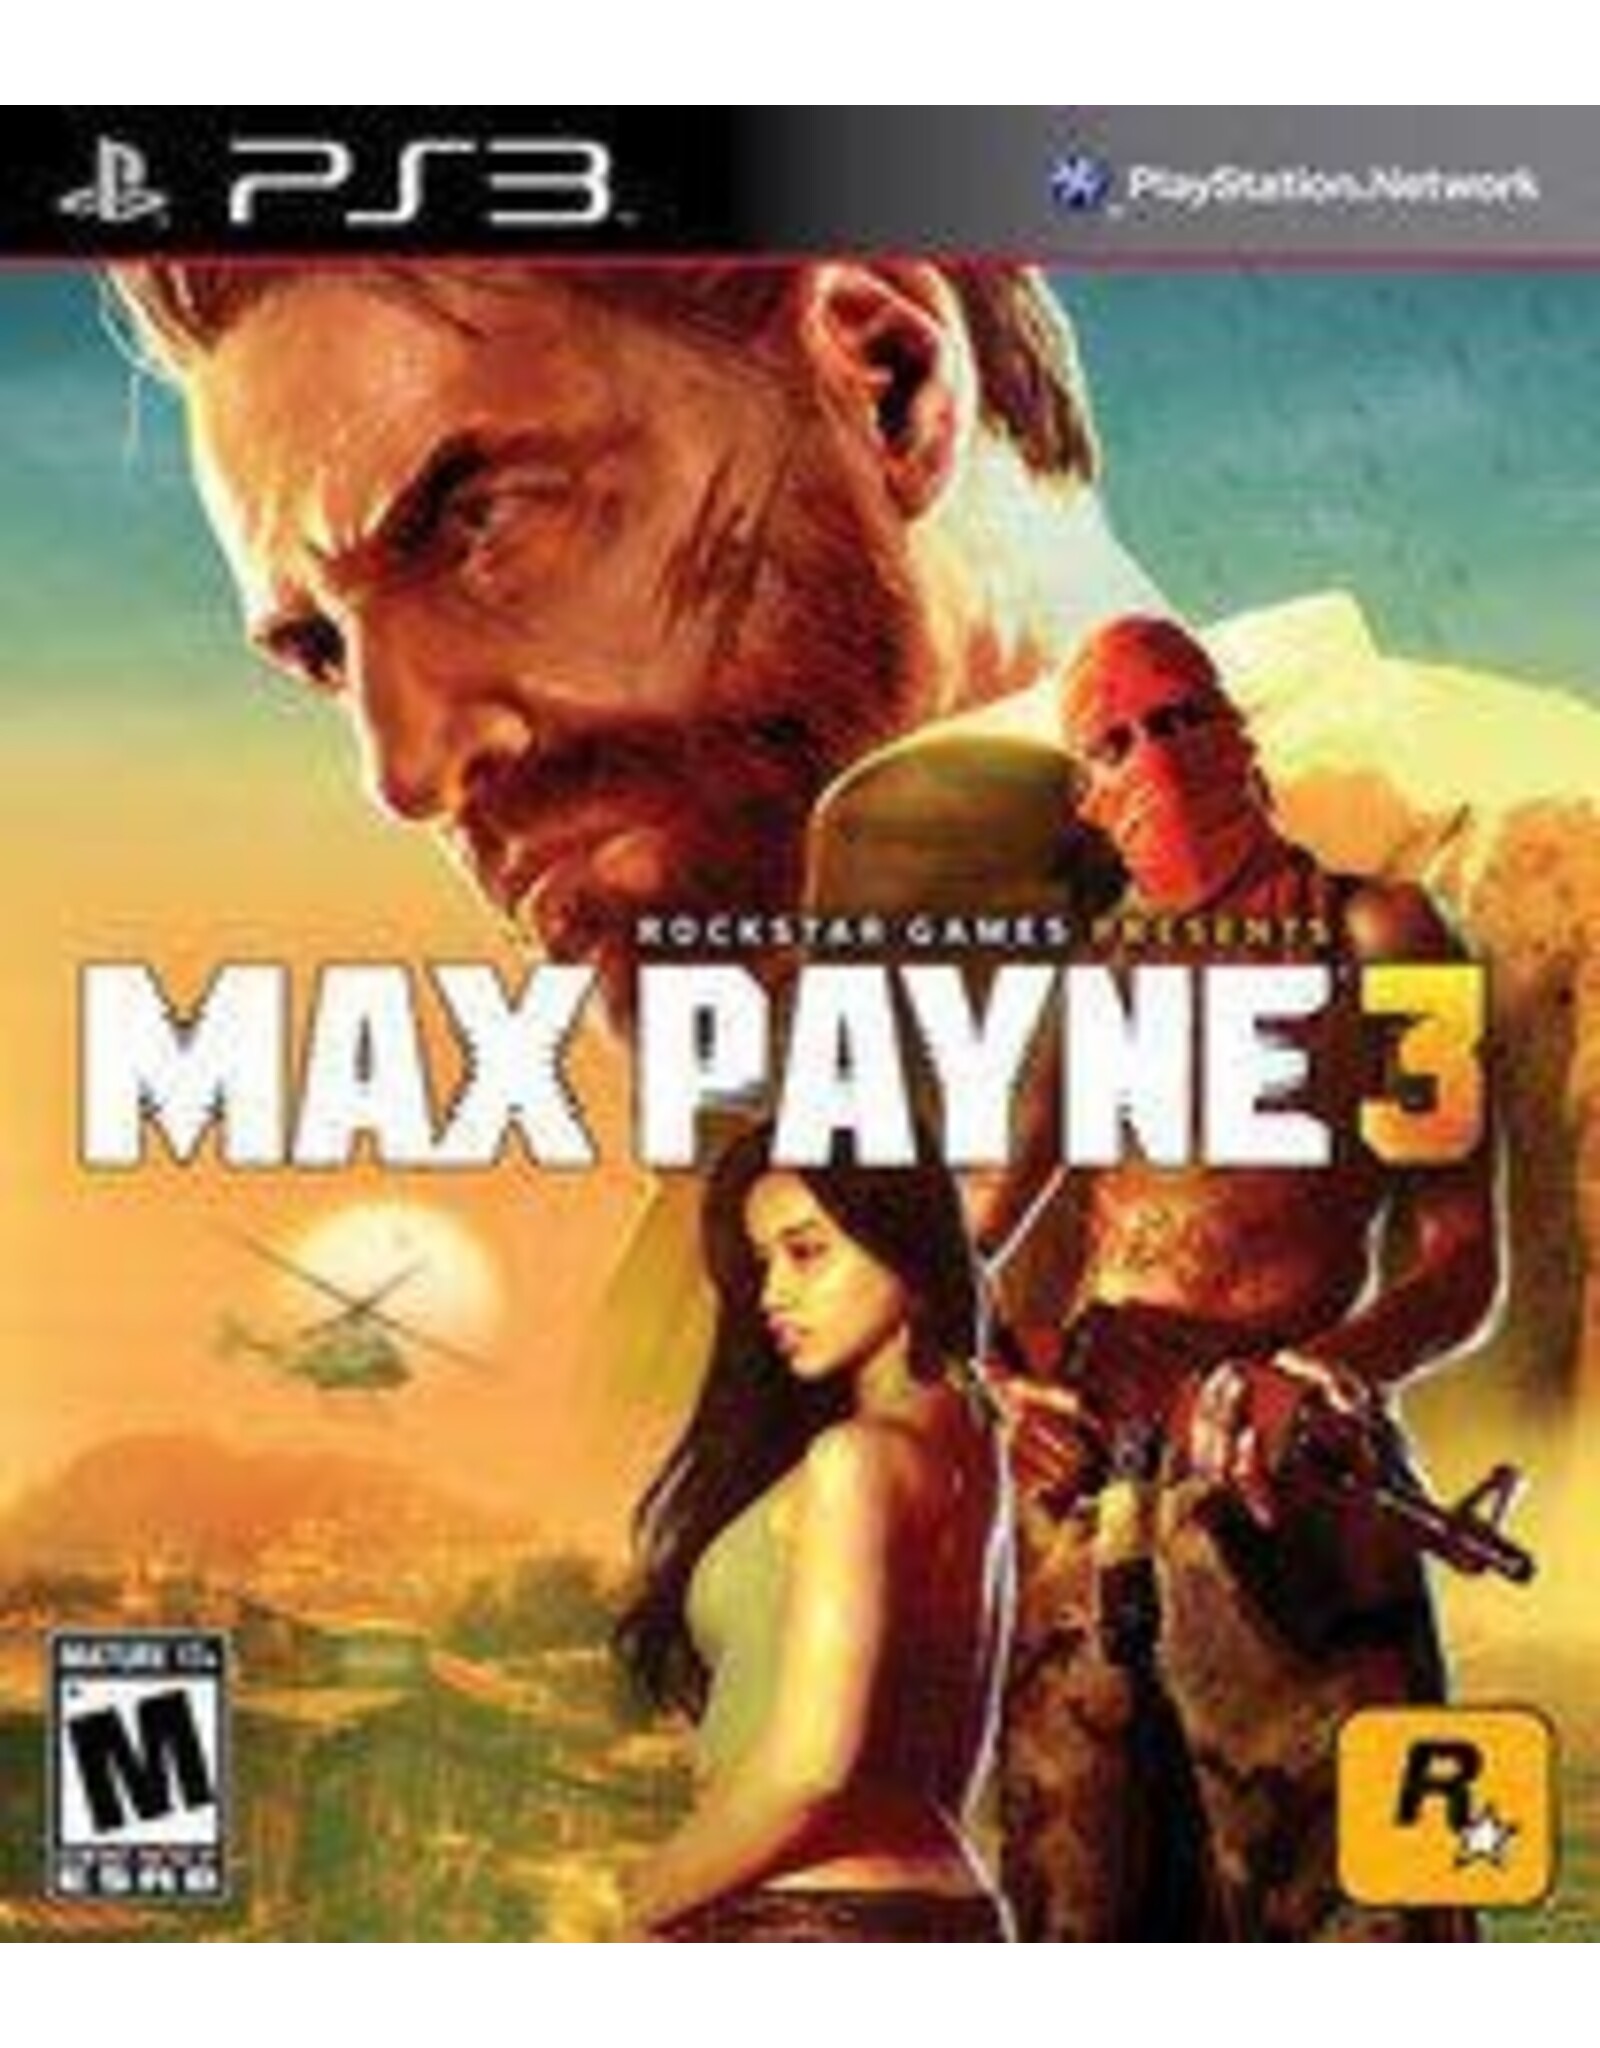 Playstation 3 Max Payne 3 (Used)